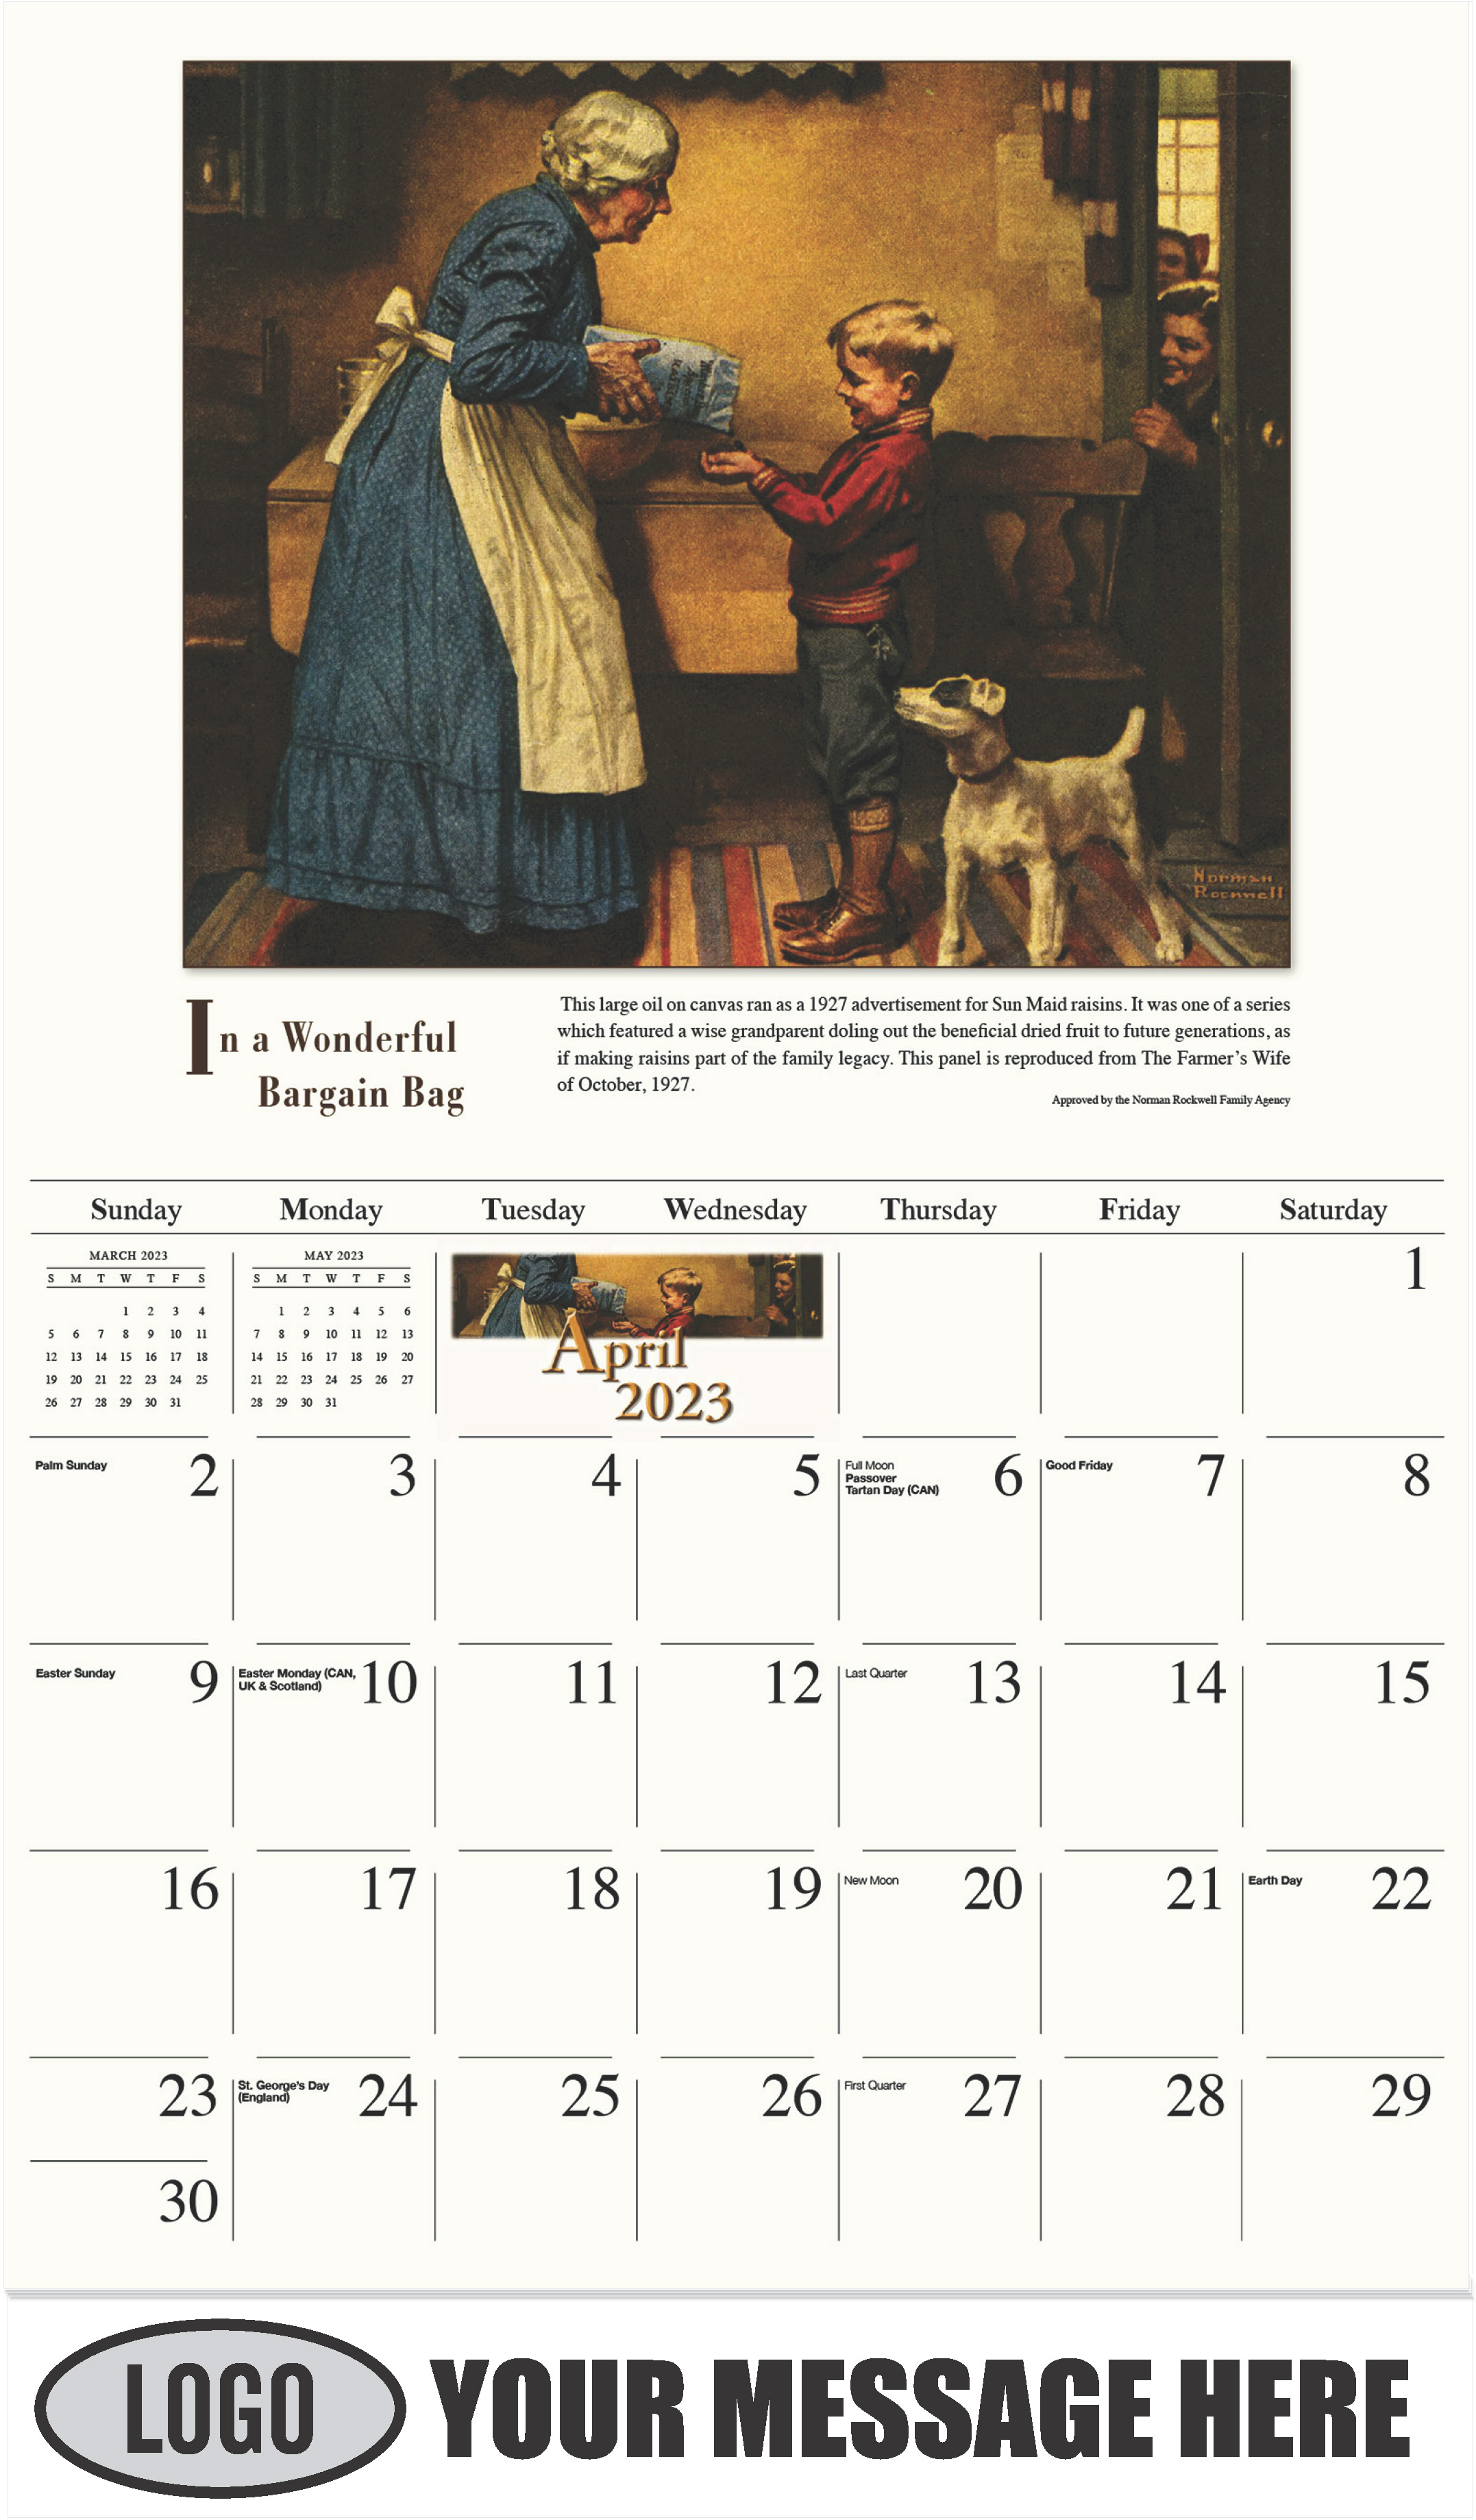 In a Wonderful Bargain Bag - April - Norman Rockwell - Memorable Images 2023 Promotional Calendar